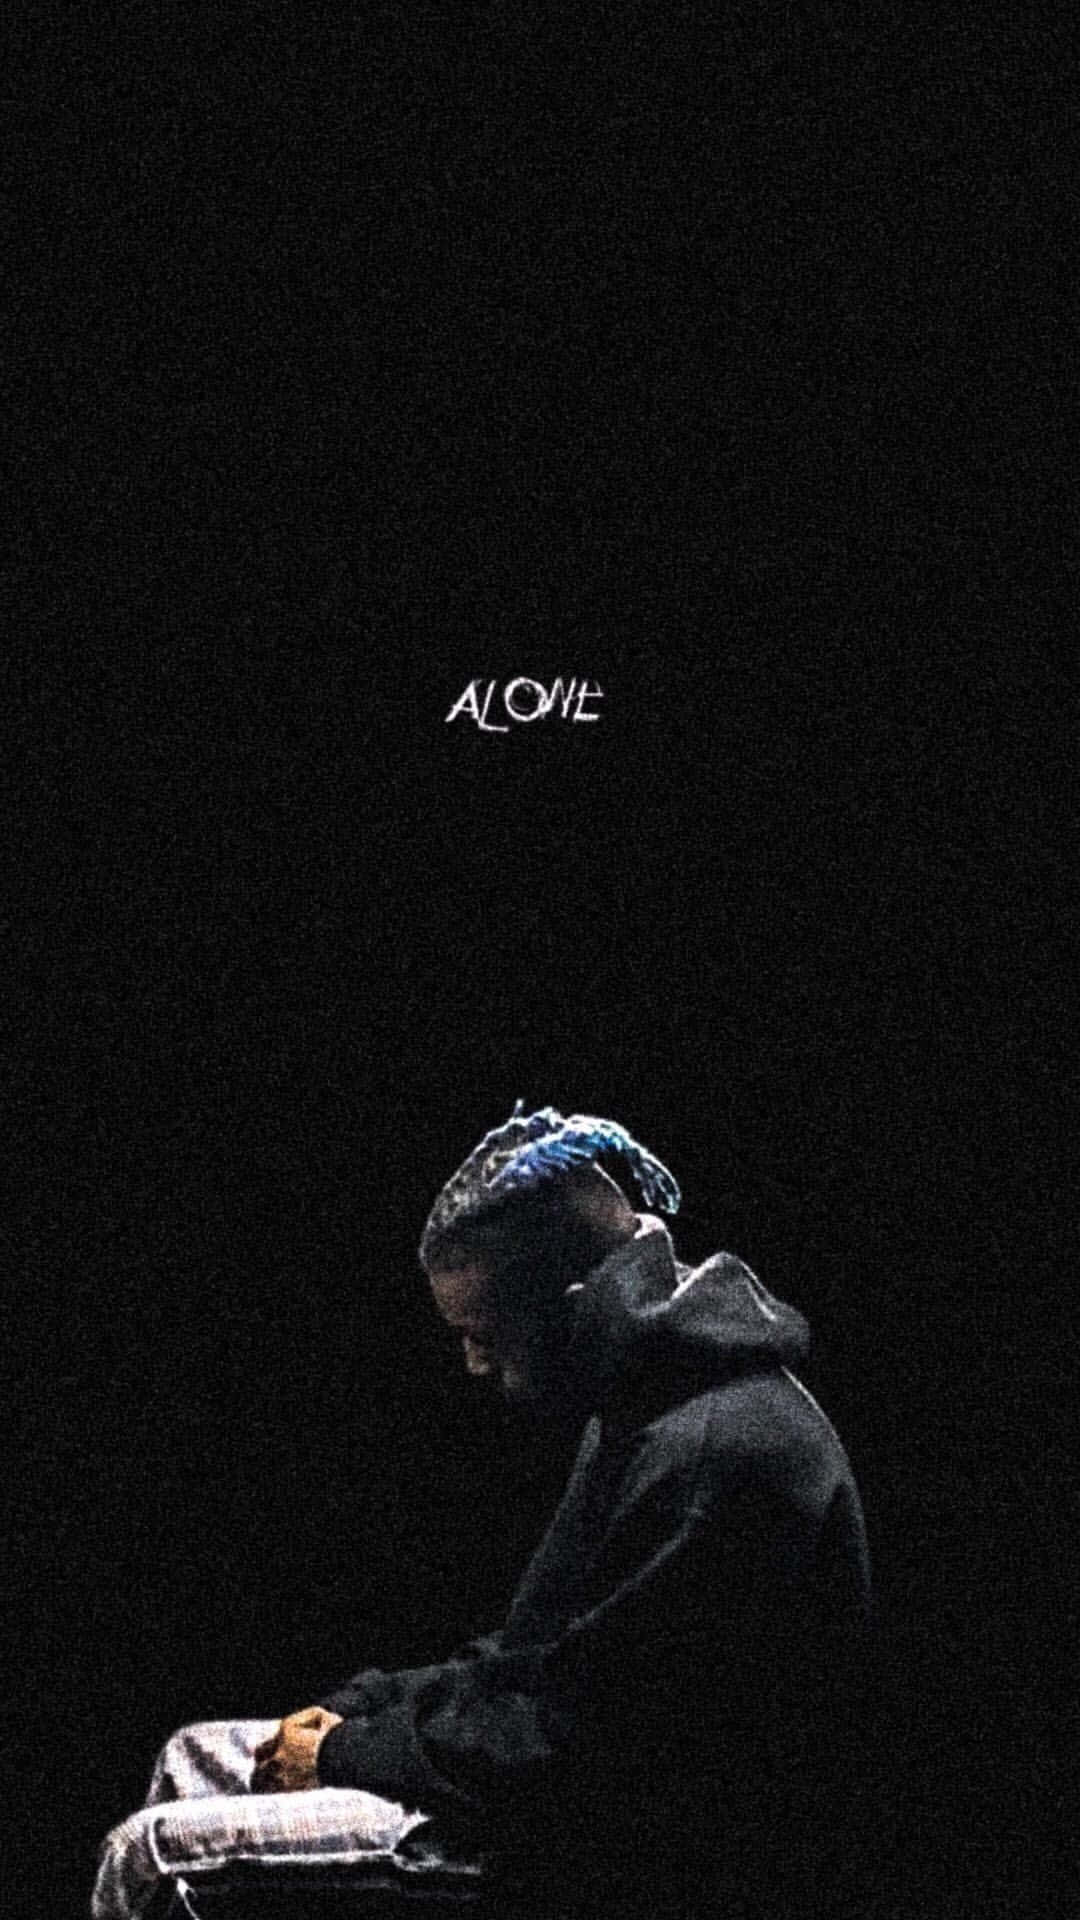 Alone XXXtentacion Rap Background Poster